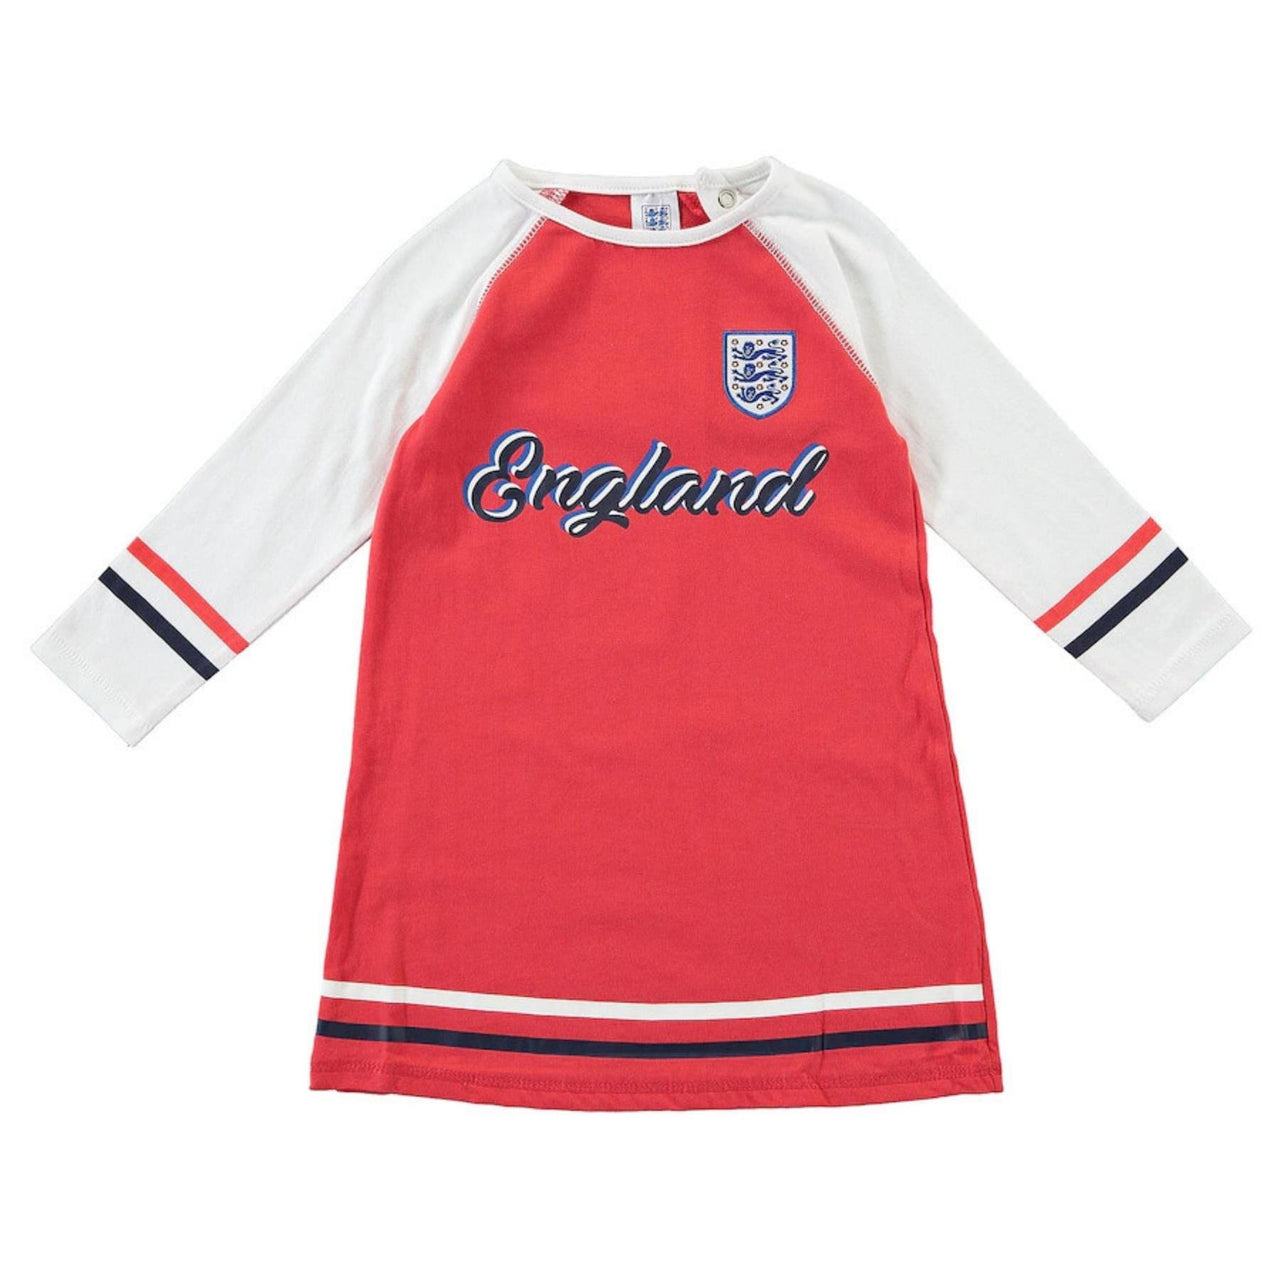 England Football Baby/Toddler Girls Dress